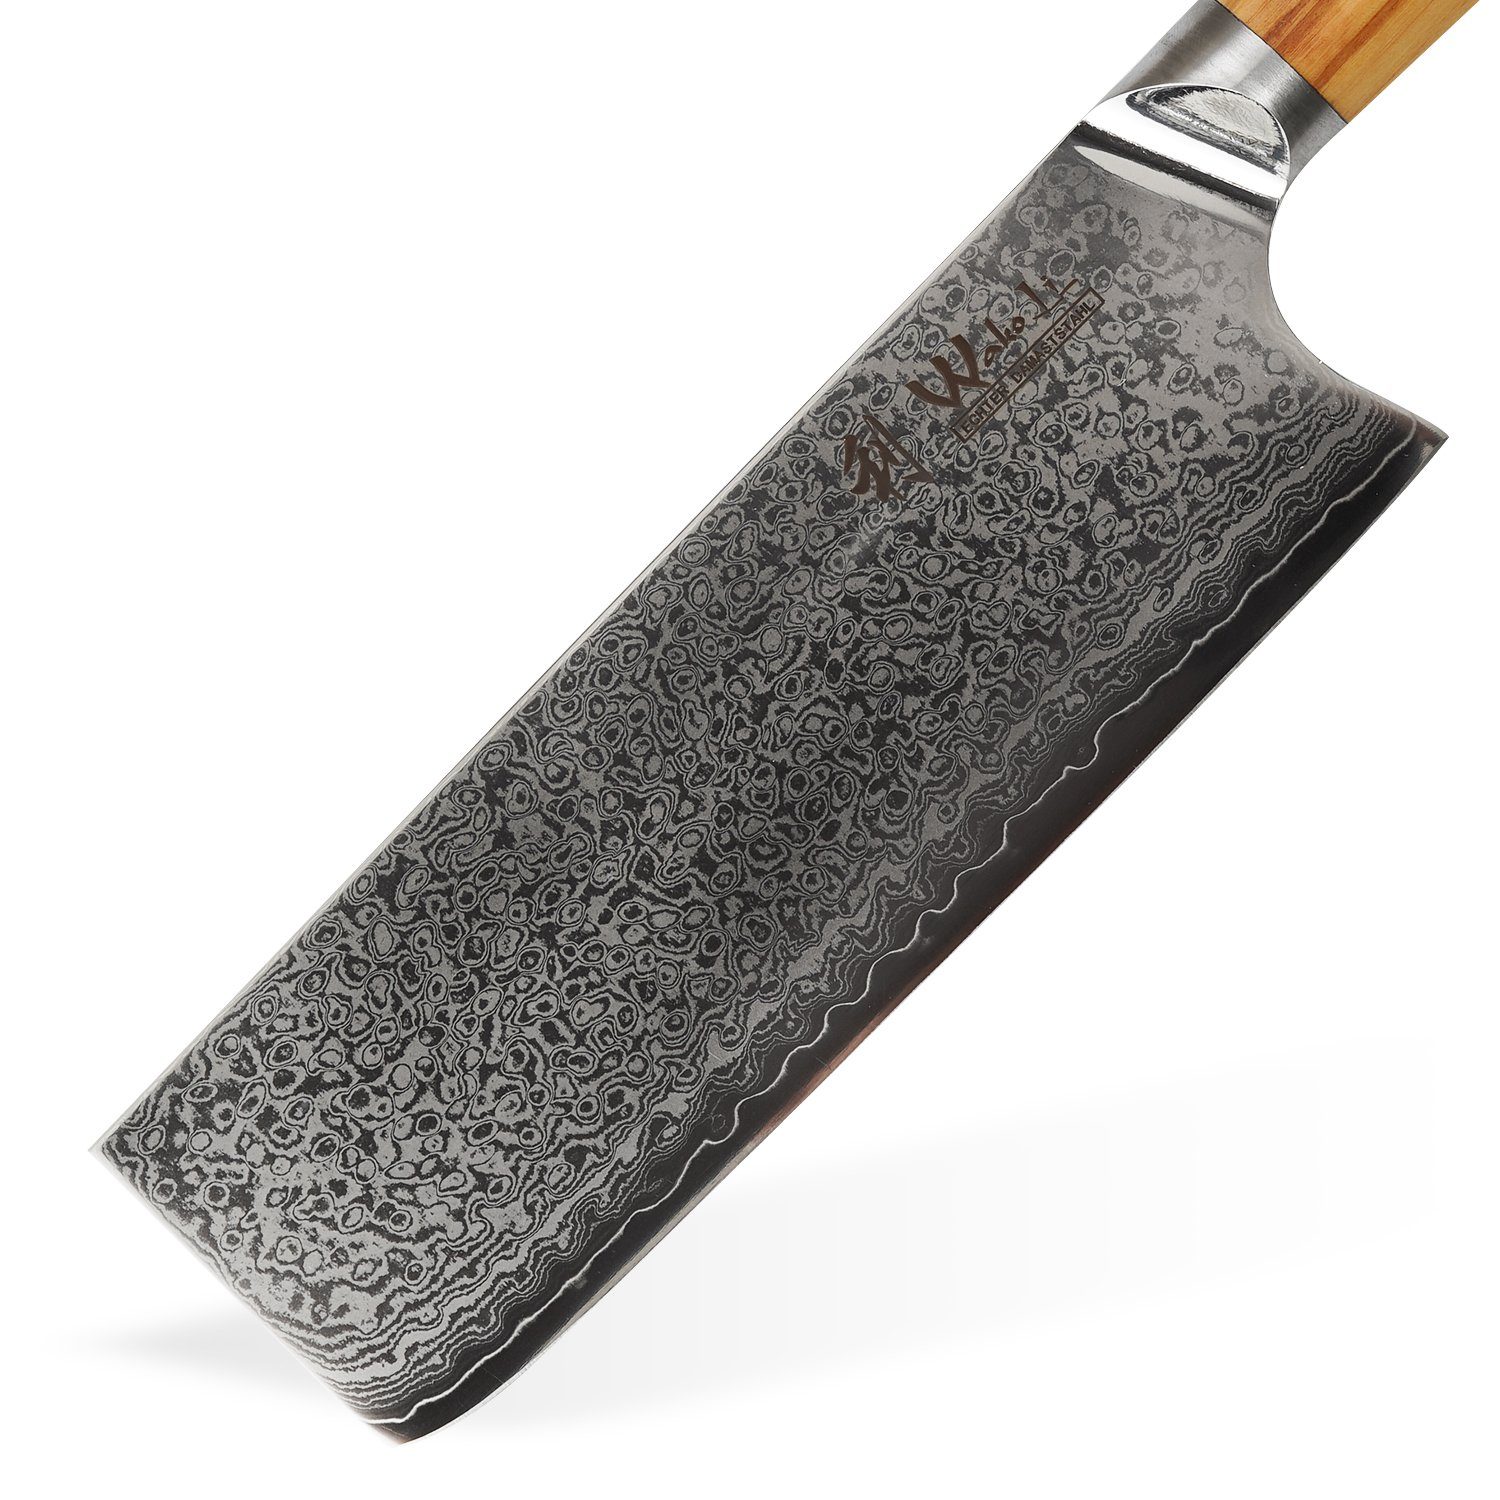 Wakoli Asiamesser Wakoli Oribu Damaststahl 67 aus Klinge Messer I 17,50 cm Lagen Nakiri